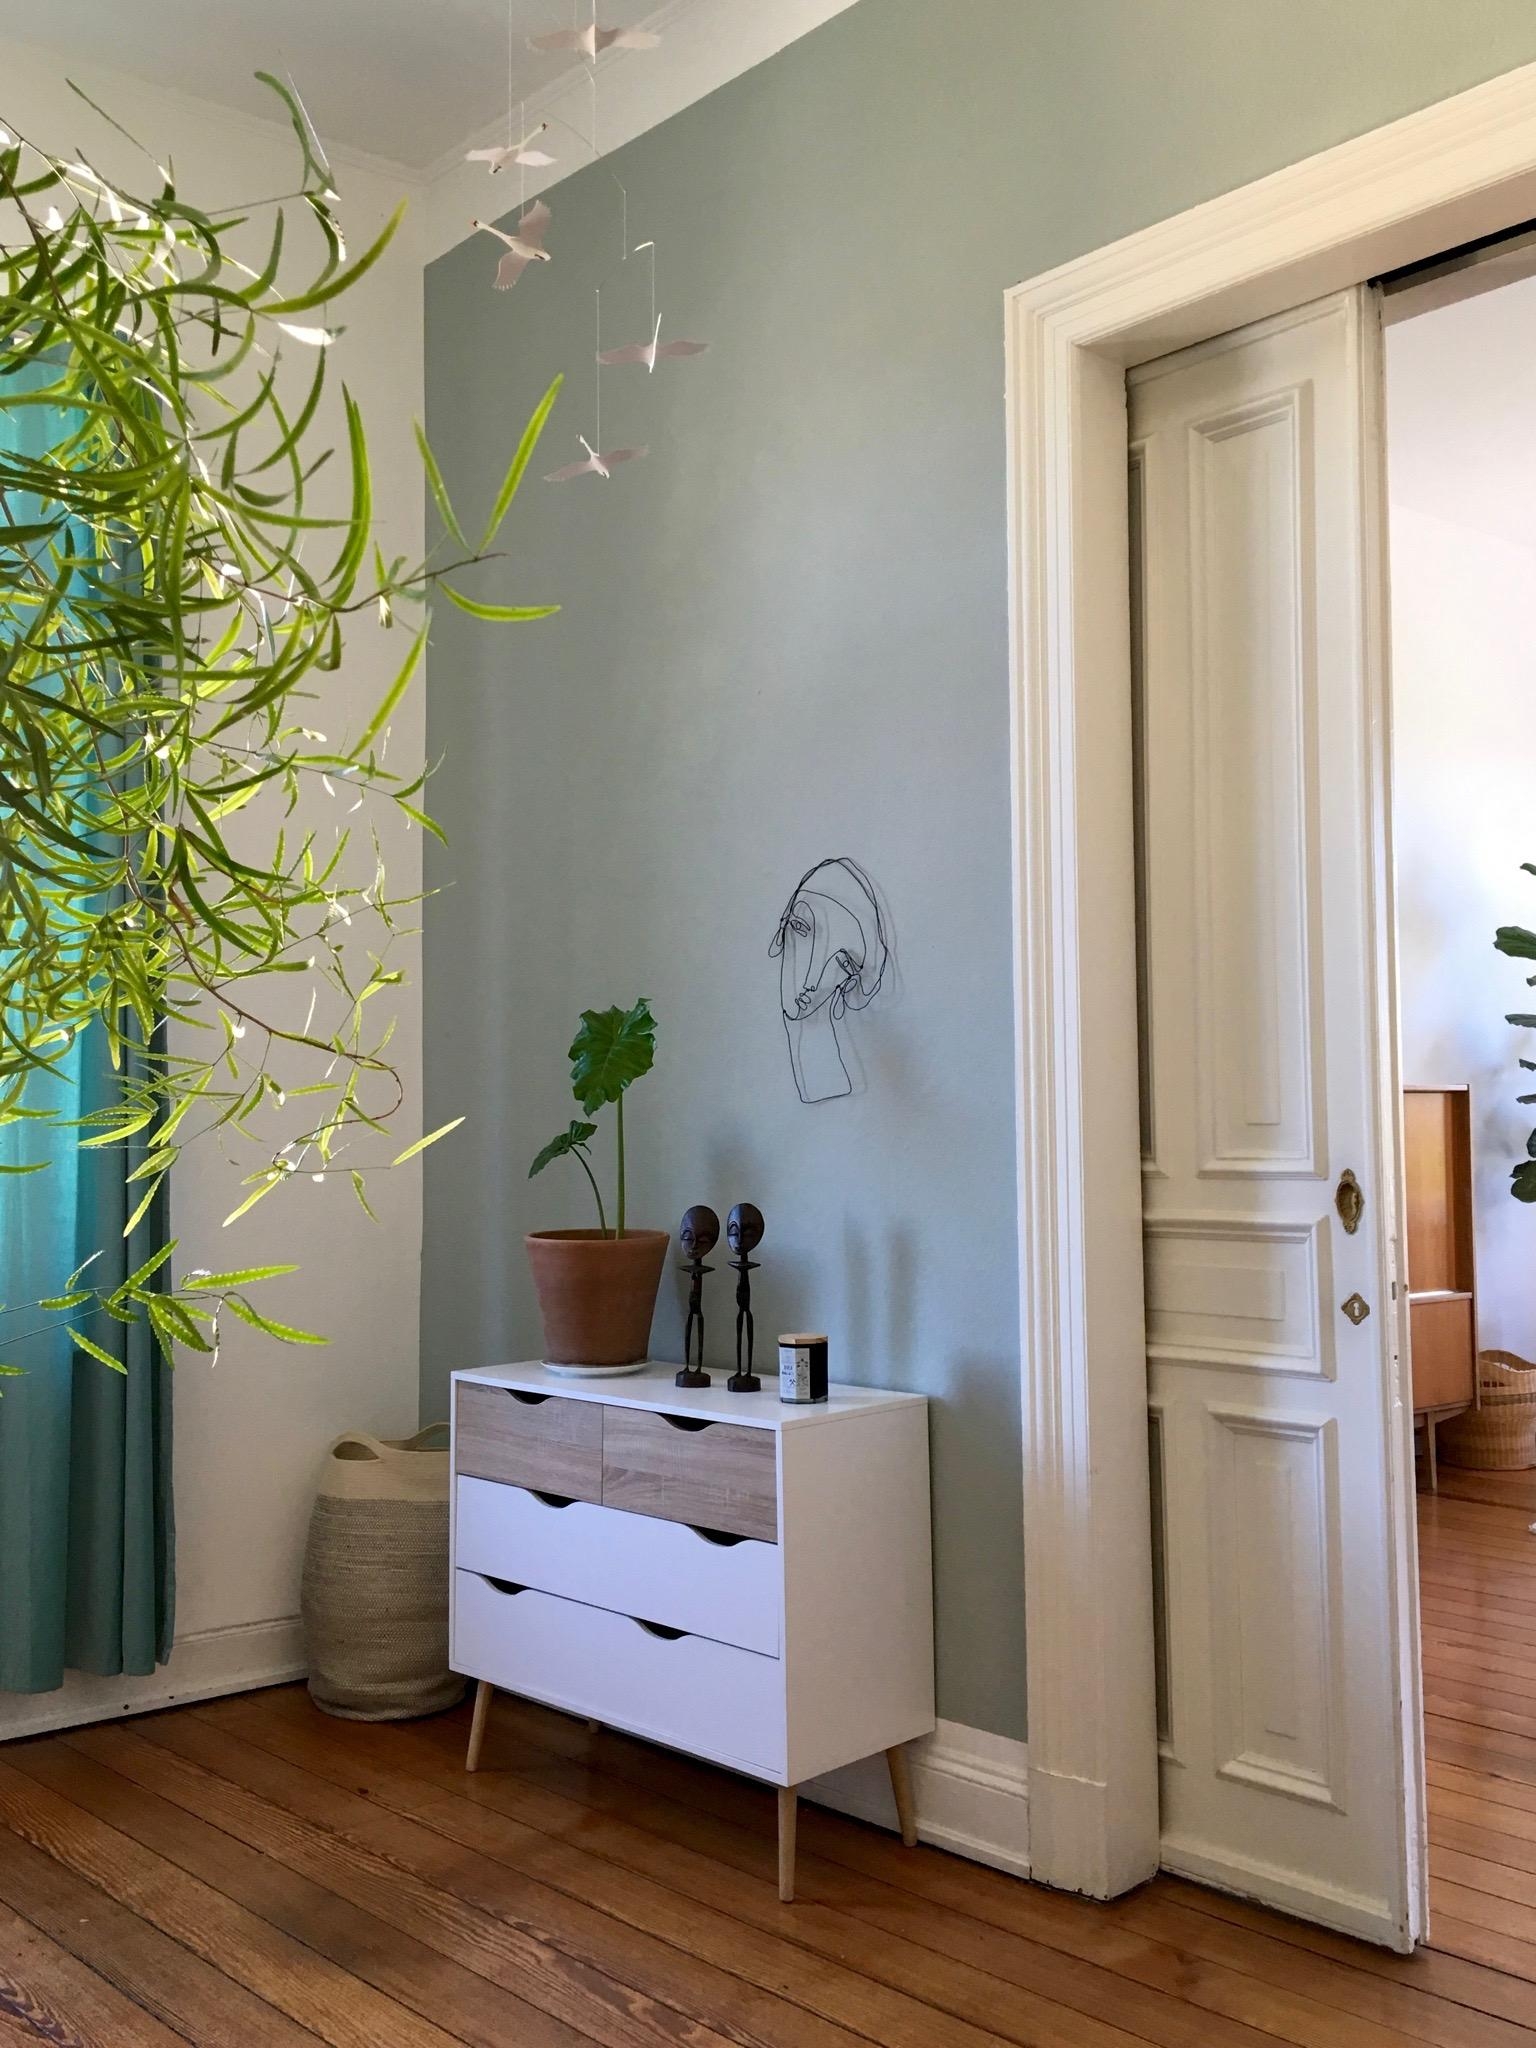 Another bedroom view 👁 🌿
#bedroom #asparagus #green #altbau #dielenboden #altbauwohnung 